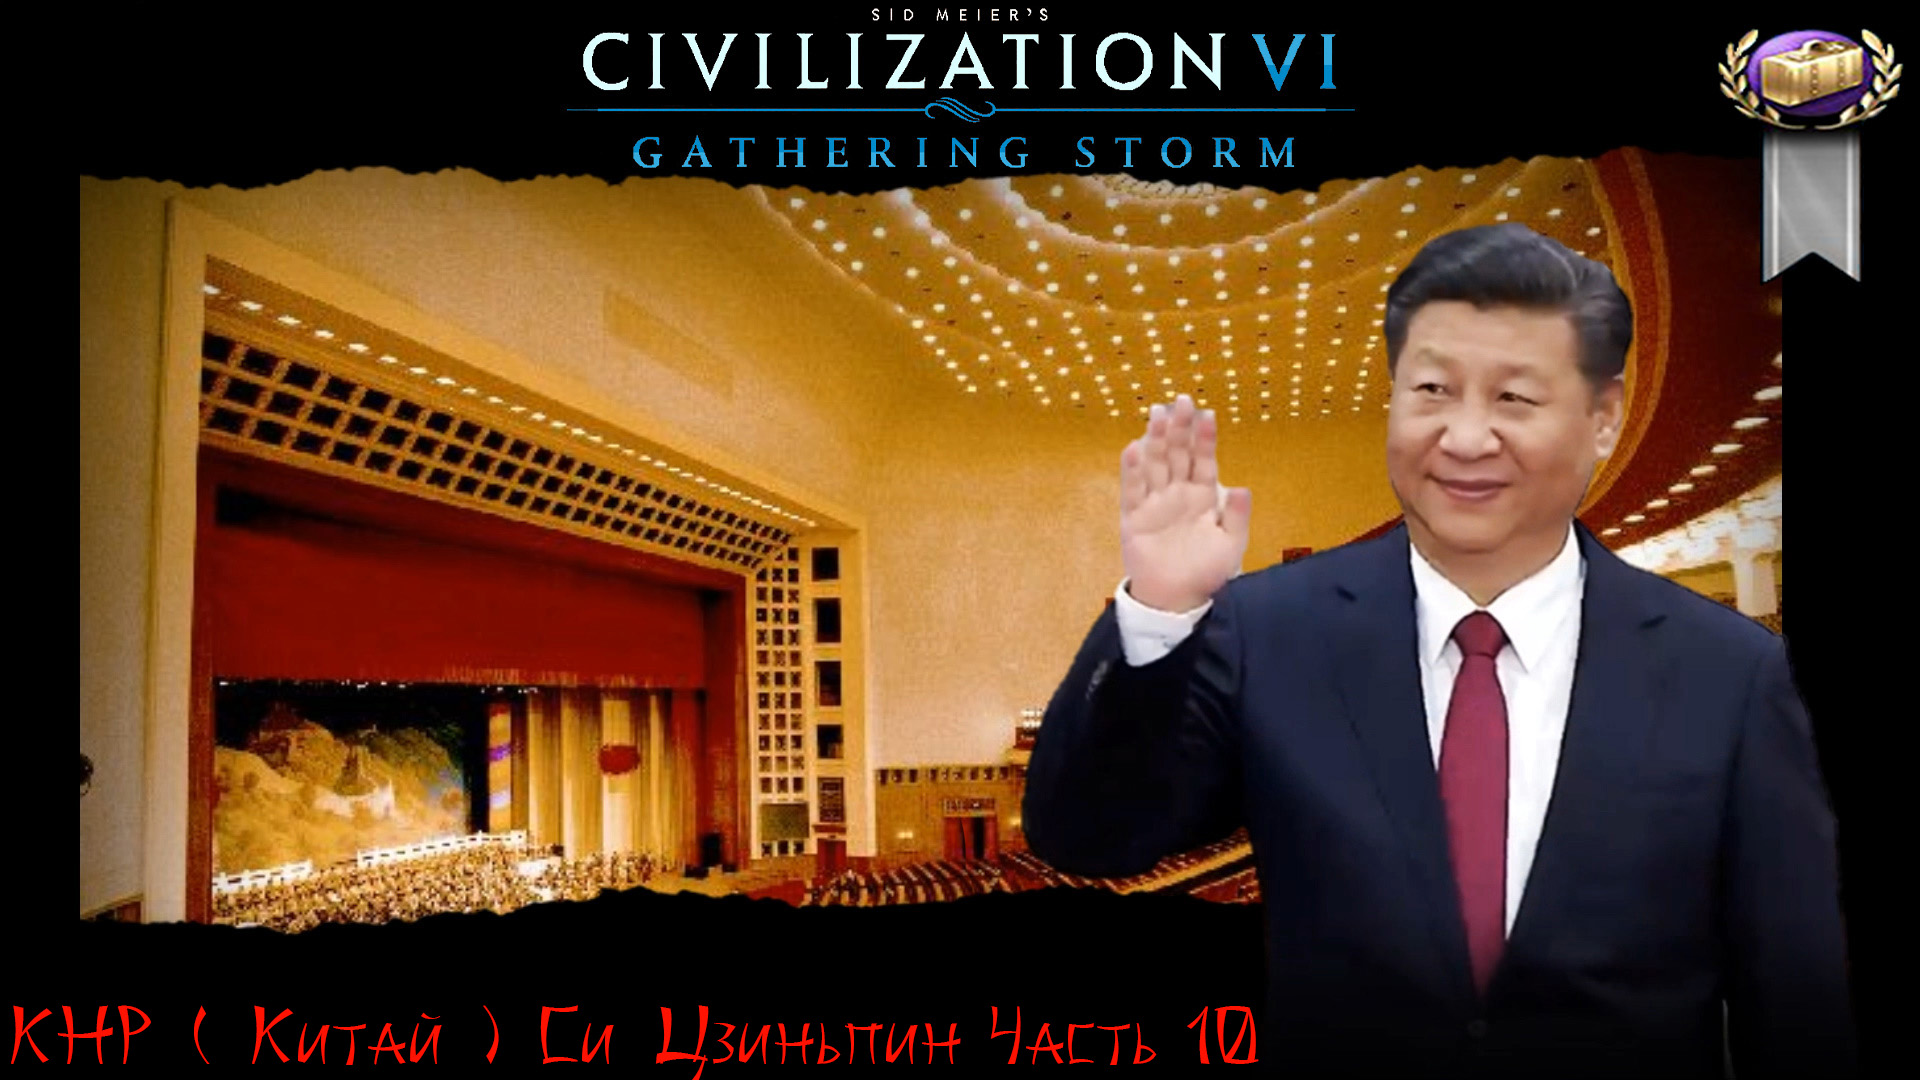 Sid Meier's Civilization VI КНР ( Китай ) Си Цзиньпин Часть 10